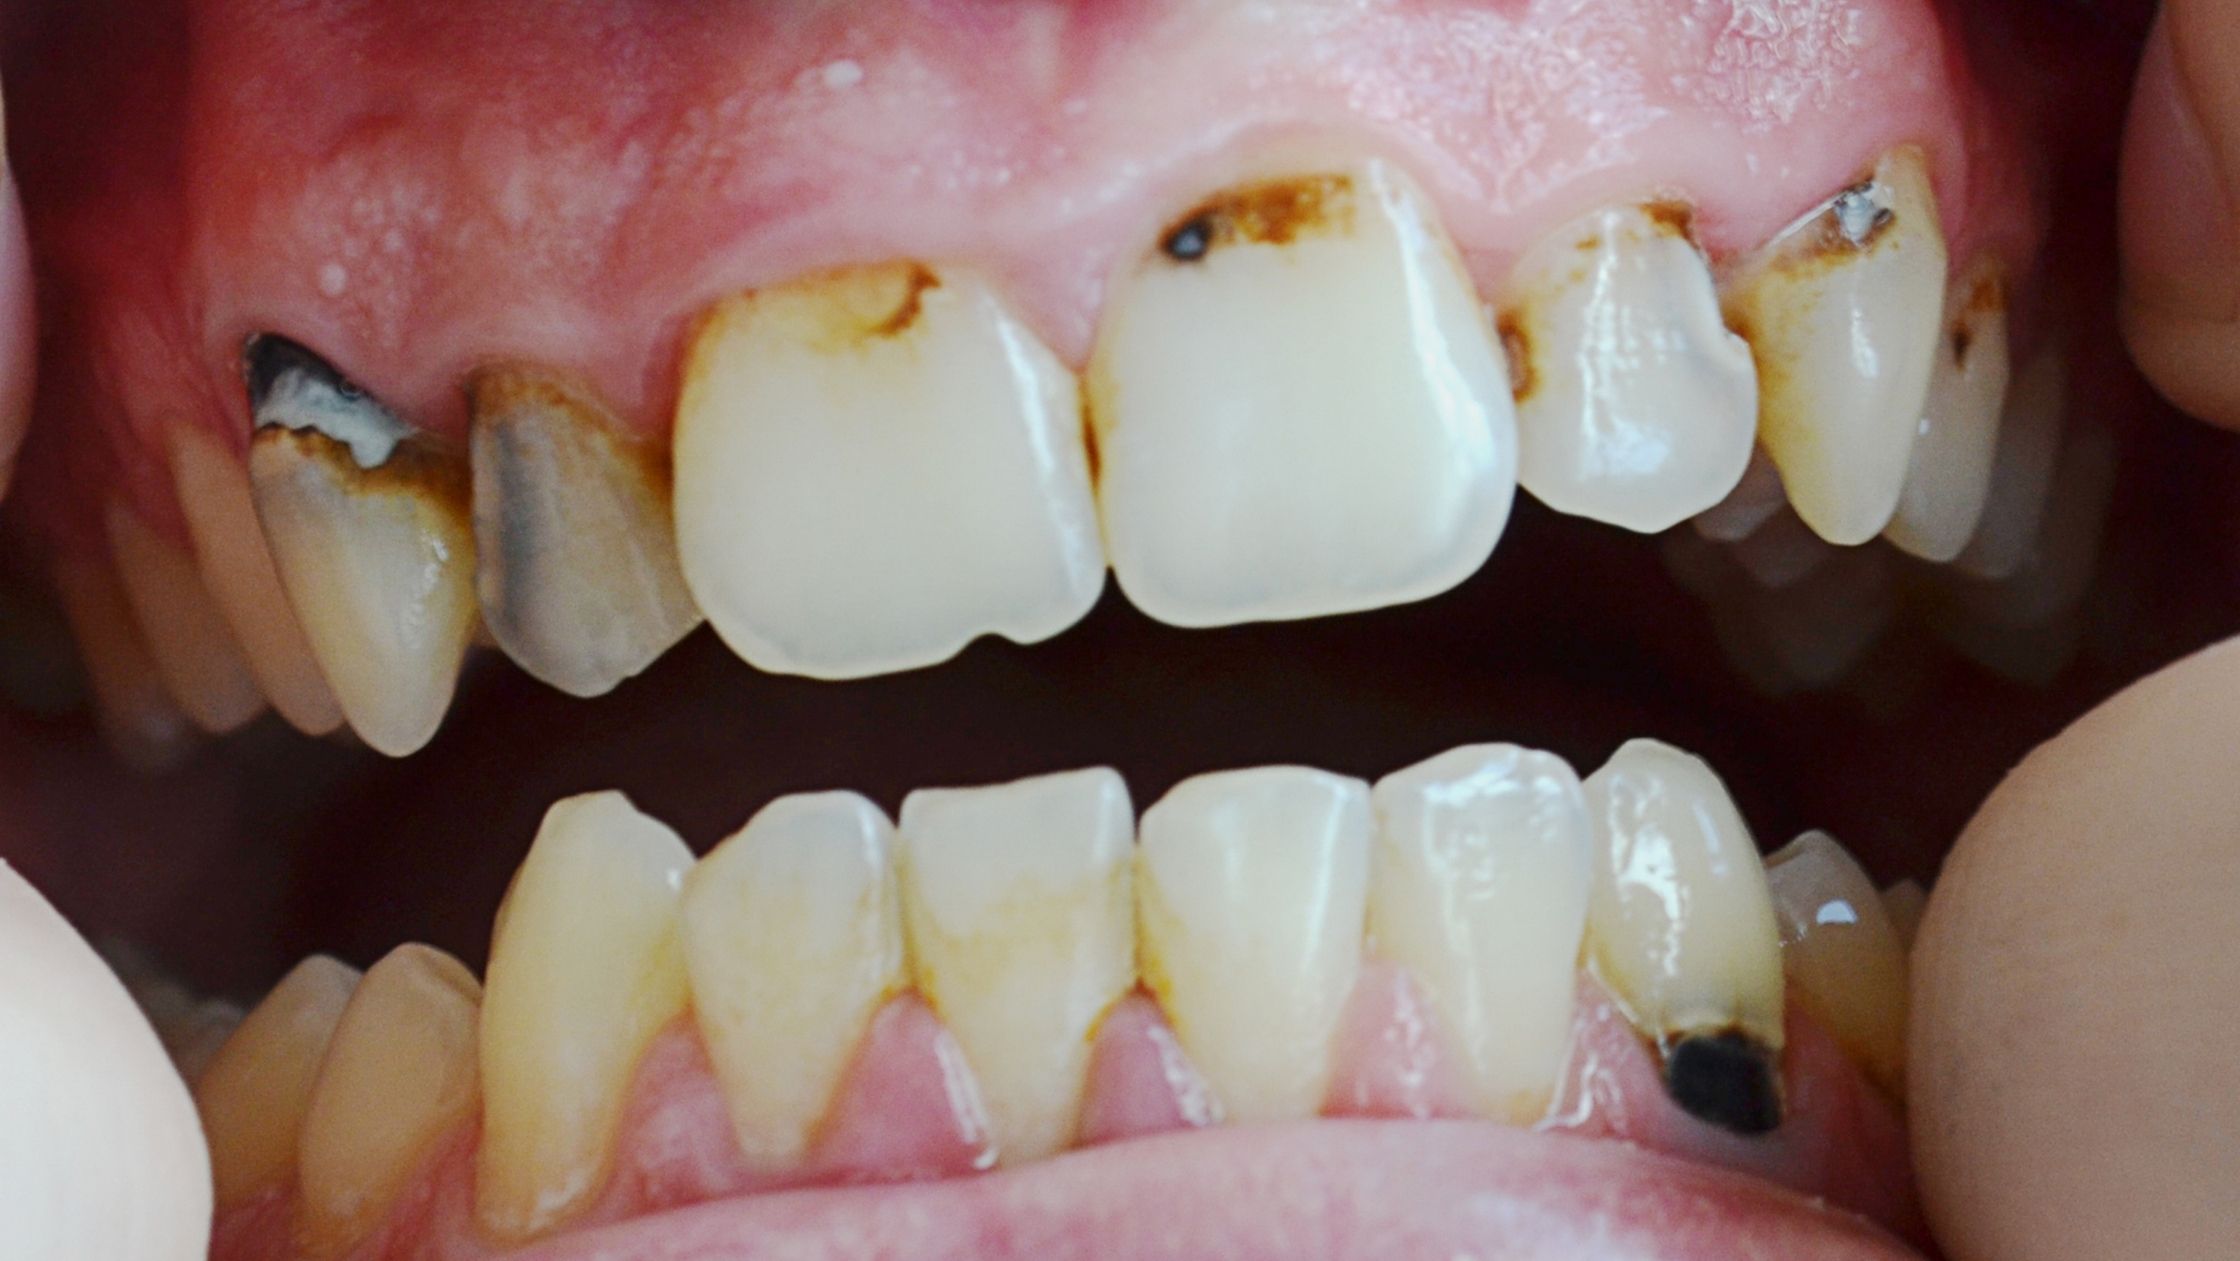 Tartar on Teeth (Dental Calculus): Causes & Removal